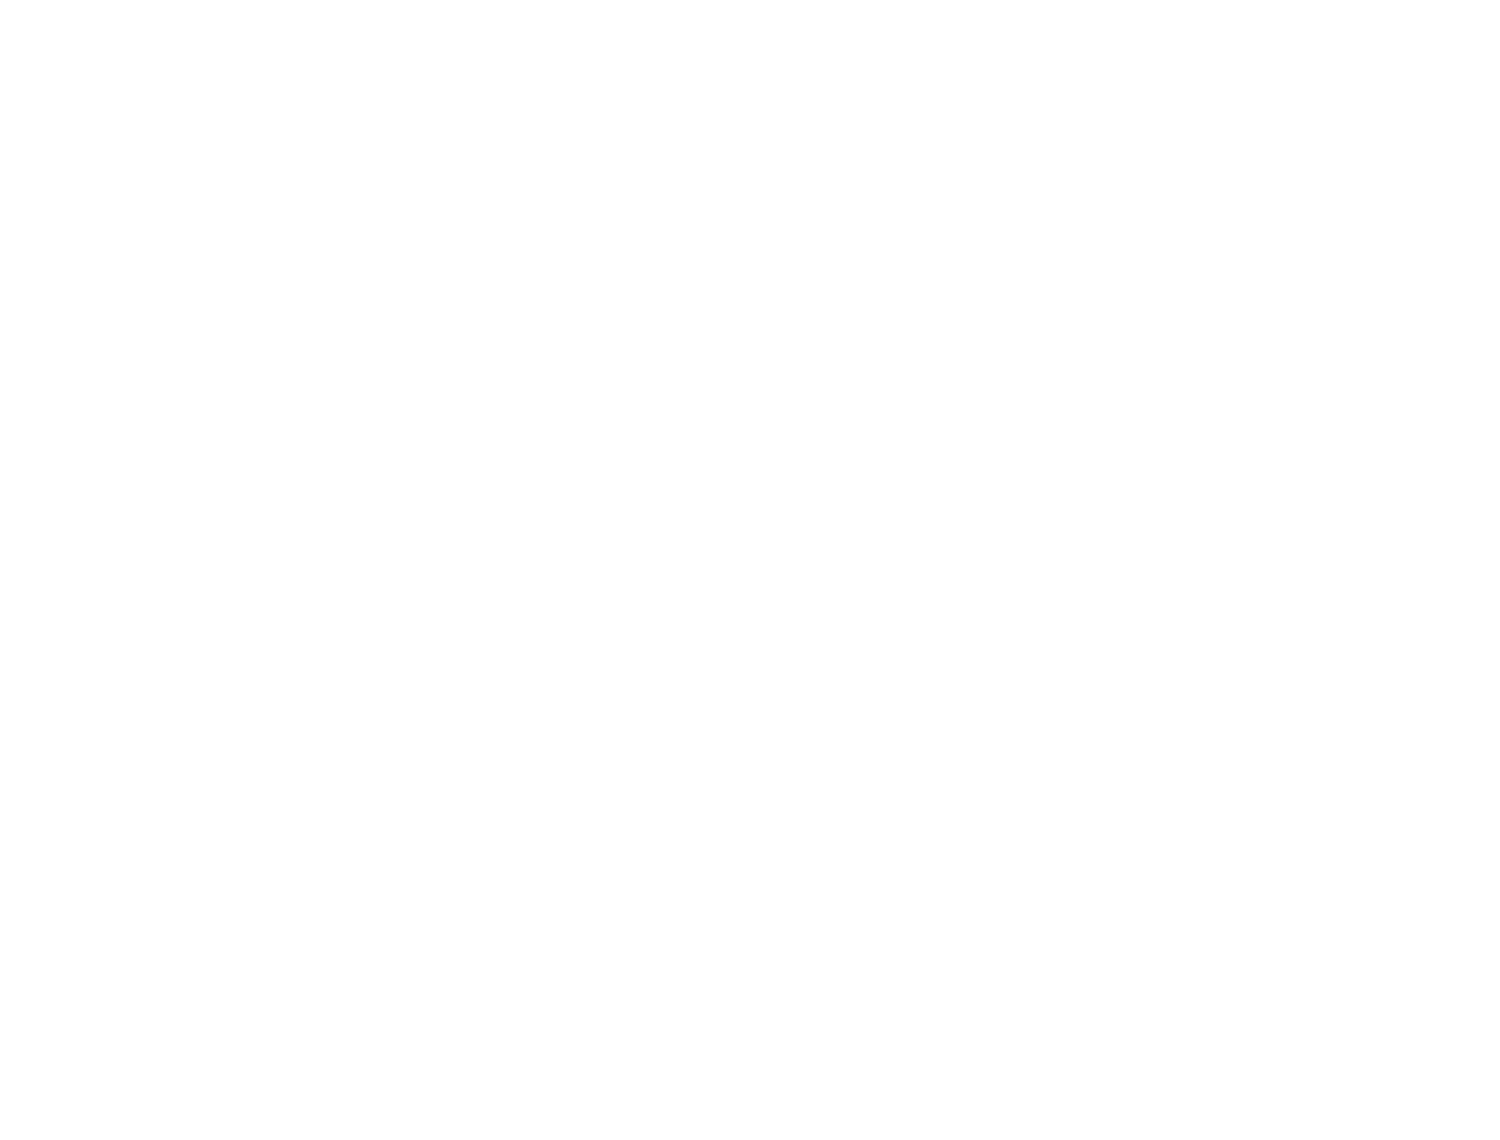 Member, Nova Scotia Seafood Alliance